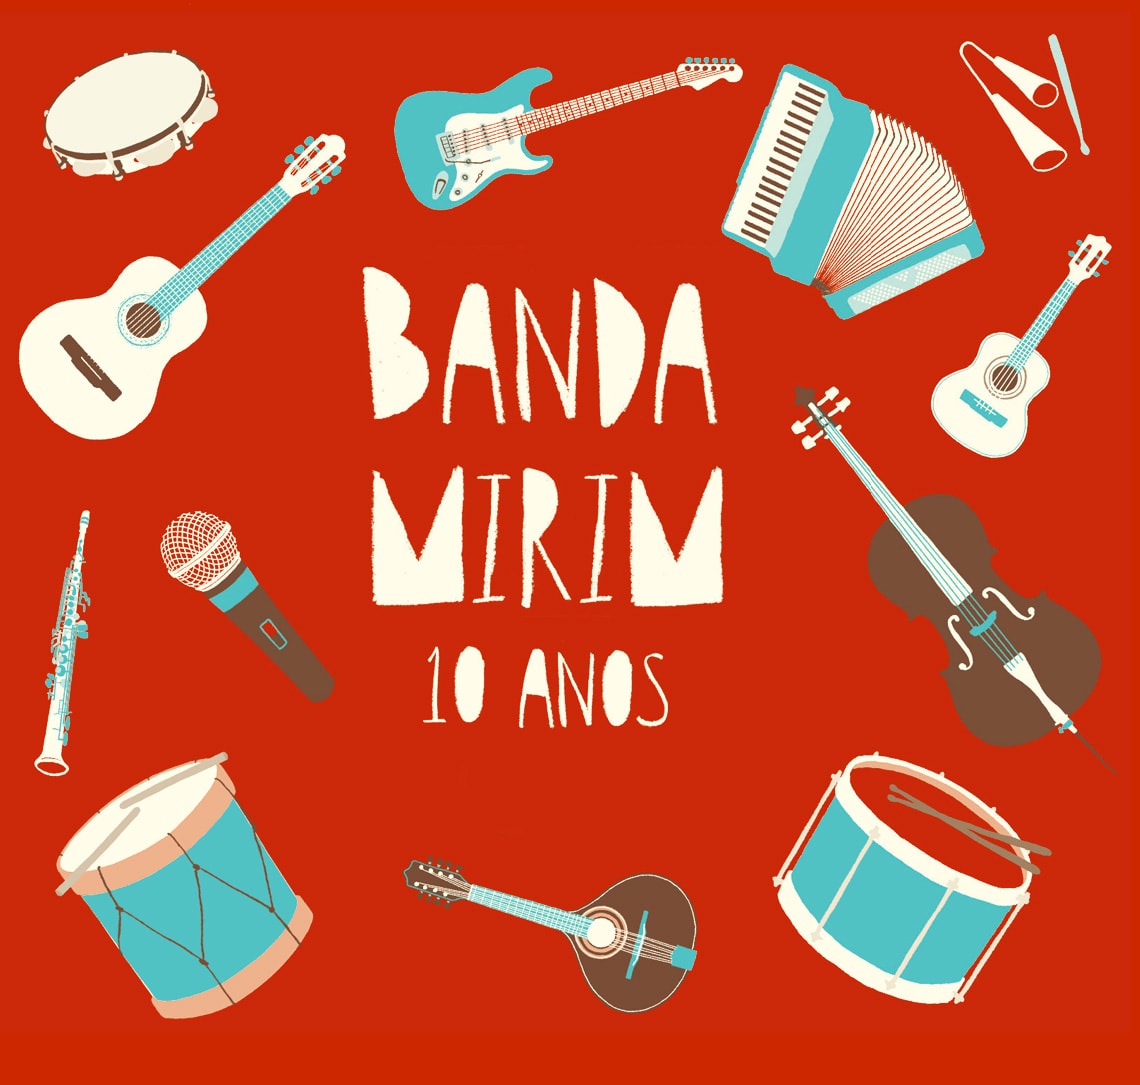 Logotipo Banda Mirim 10 anos